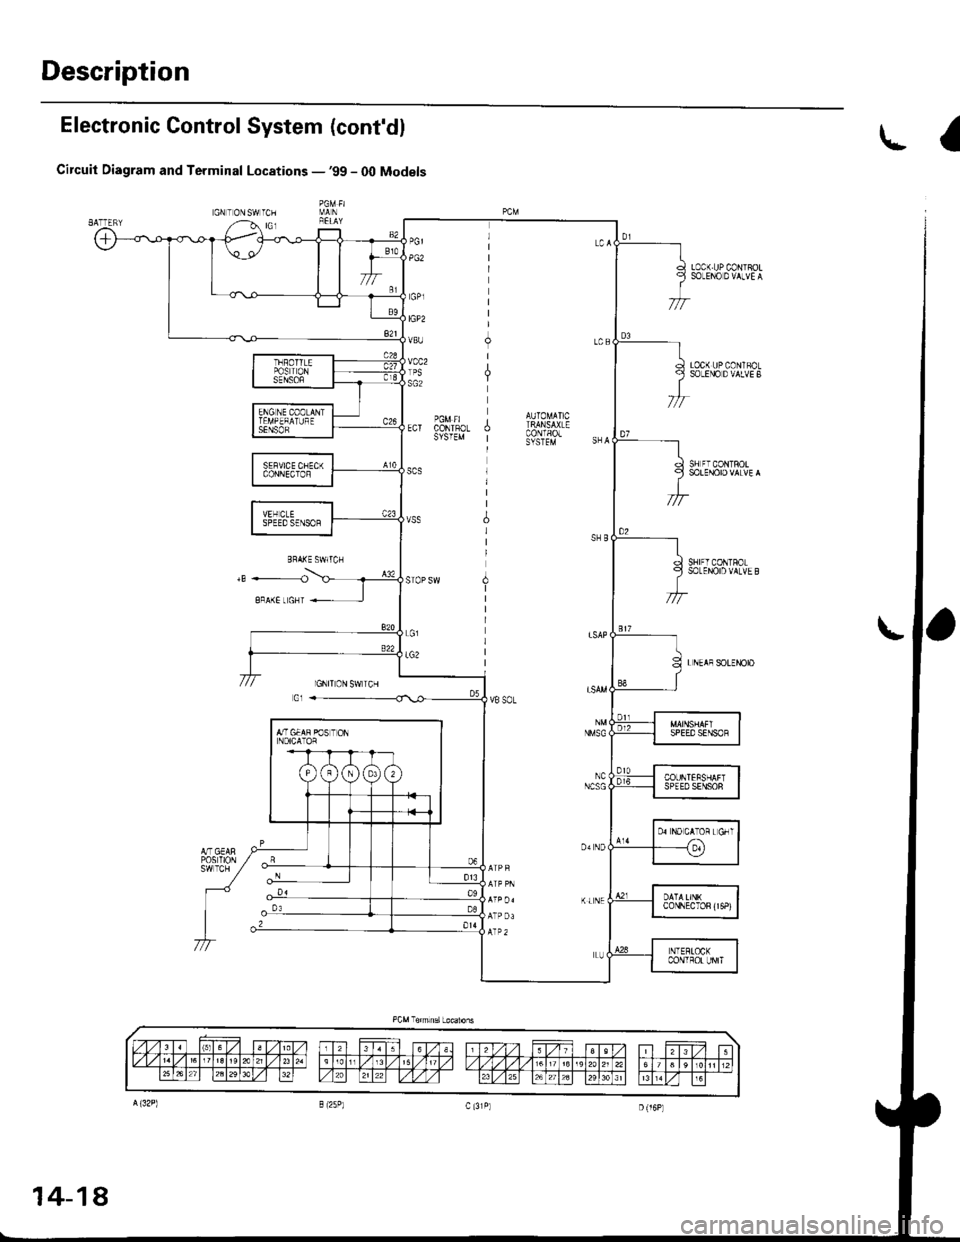 HONDA CIVIC 2000 6.G Workshop Manual Description
Electronic Control System (contdl
Circuit Diagram and Terminal Locations -99 - O0 Models
GNTONSWICH,,--b. rcj
LI
LOCK.UPCONIFOLSOLEI\Q D VALVE A
LOCK UP CONIROLSOLENODVALVEB
SH FI CONTR